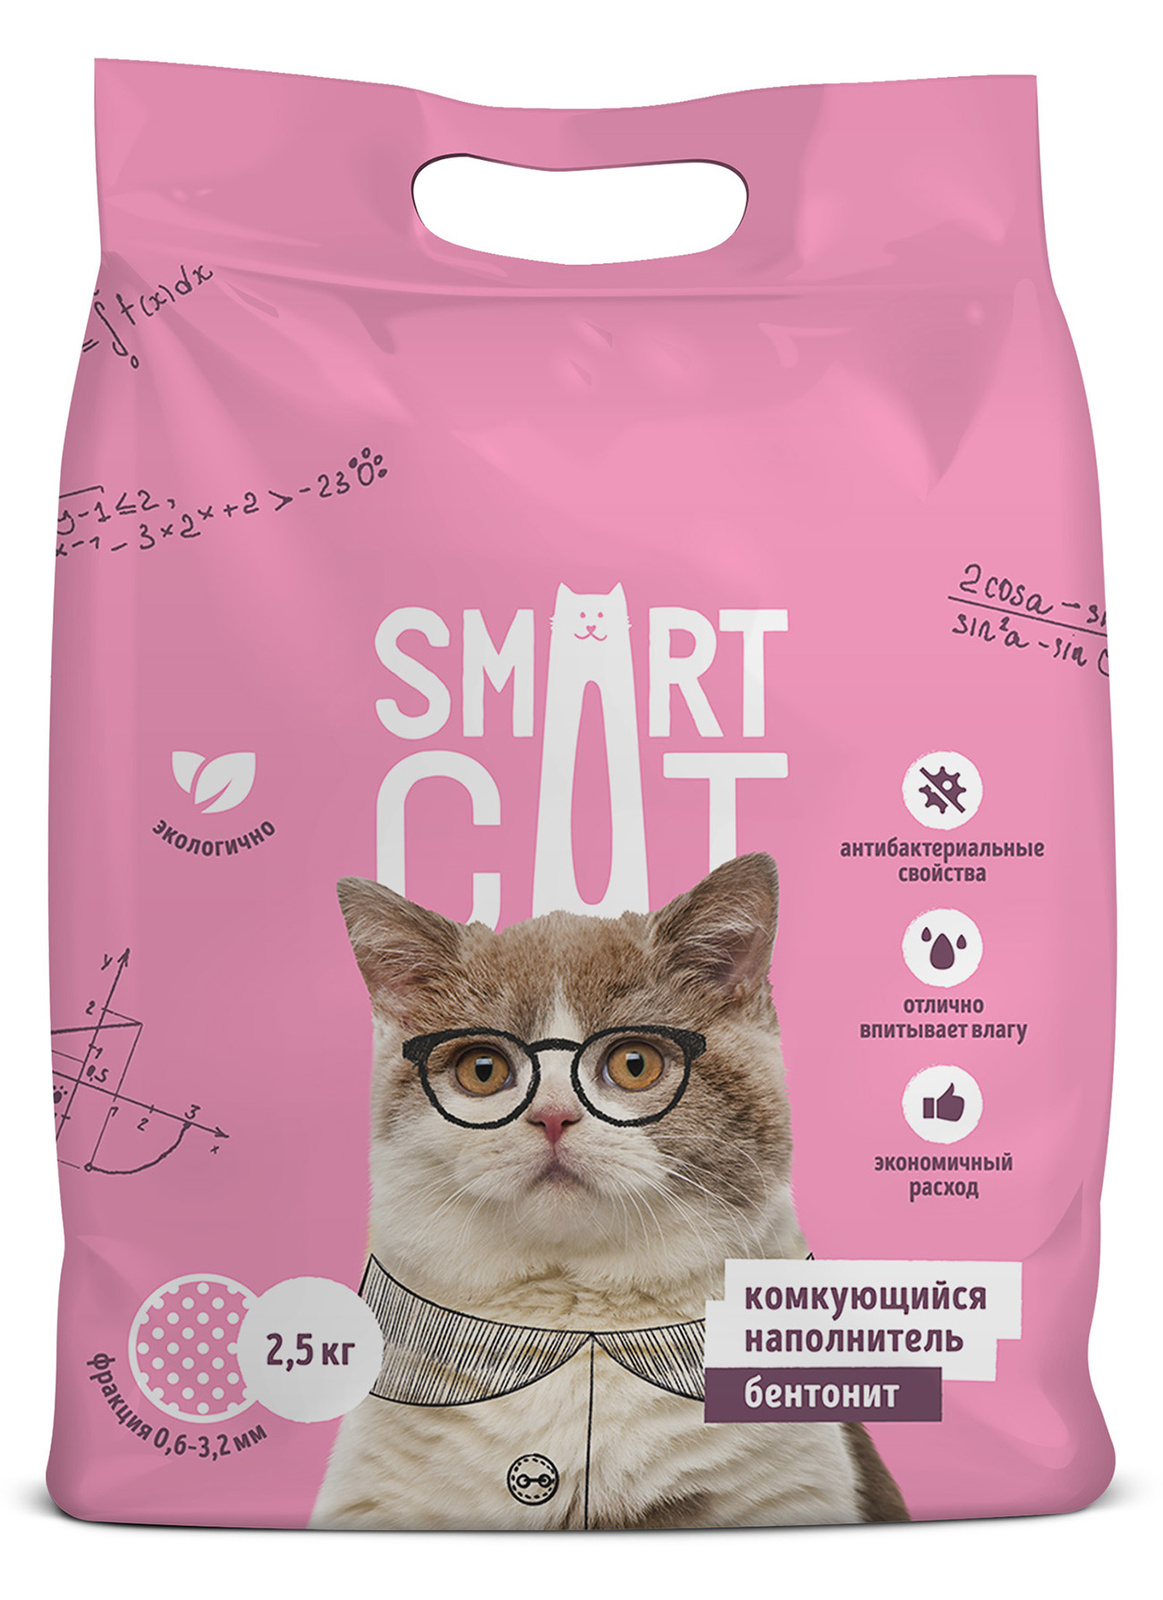 Smart Cat наполнитель комкующийся наполнитель (5 кг) Smart Cat наполнитель комкующийся наполнитель (5 кг) - фото 1